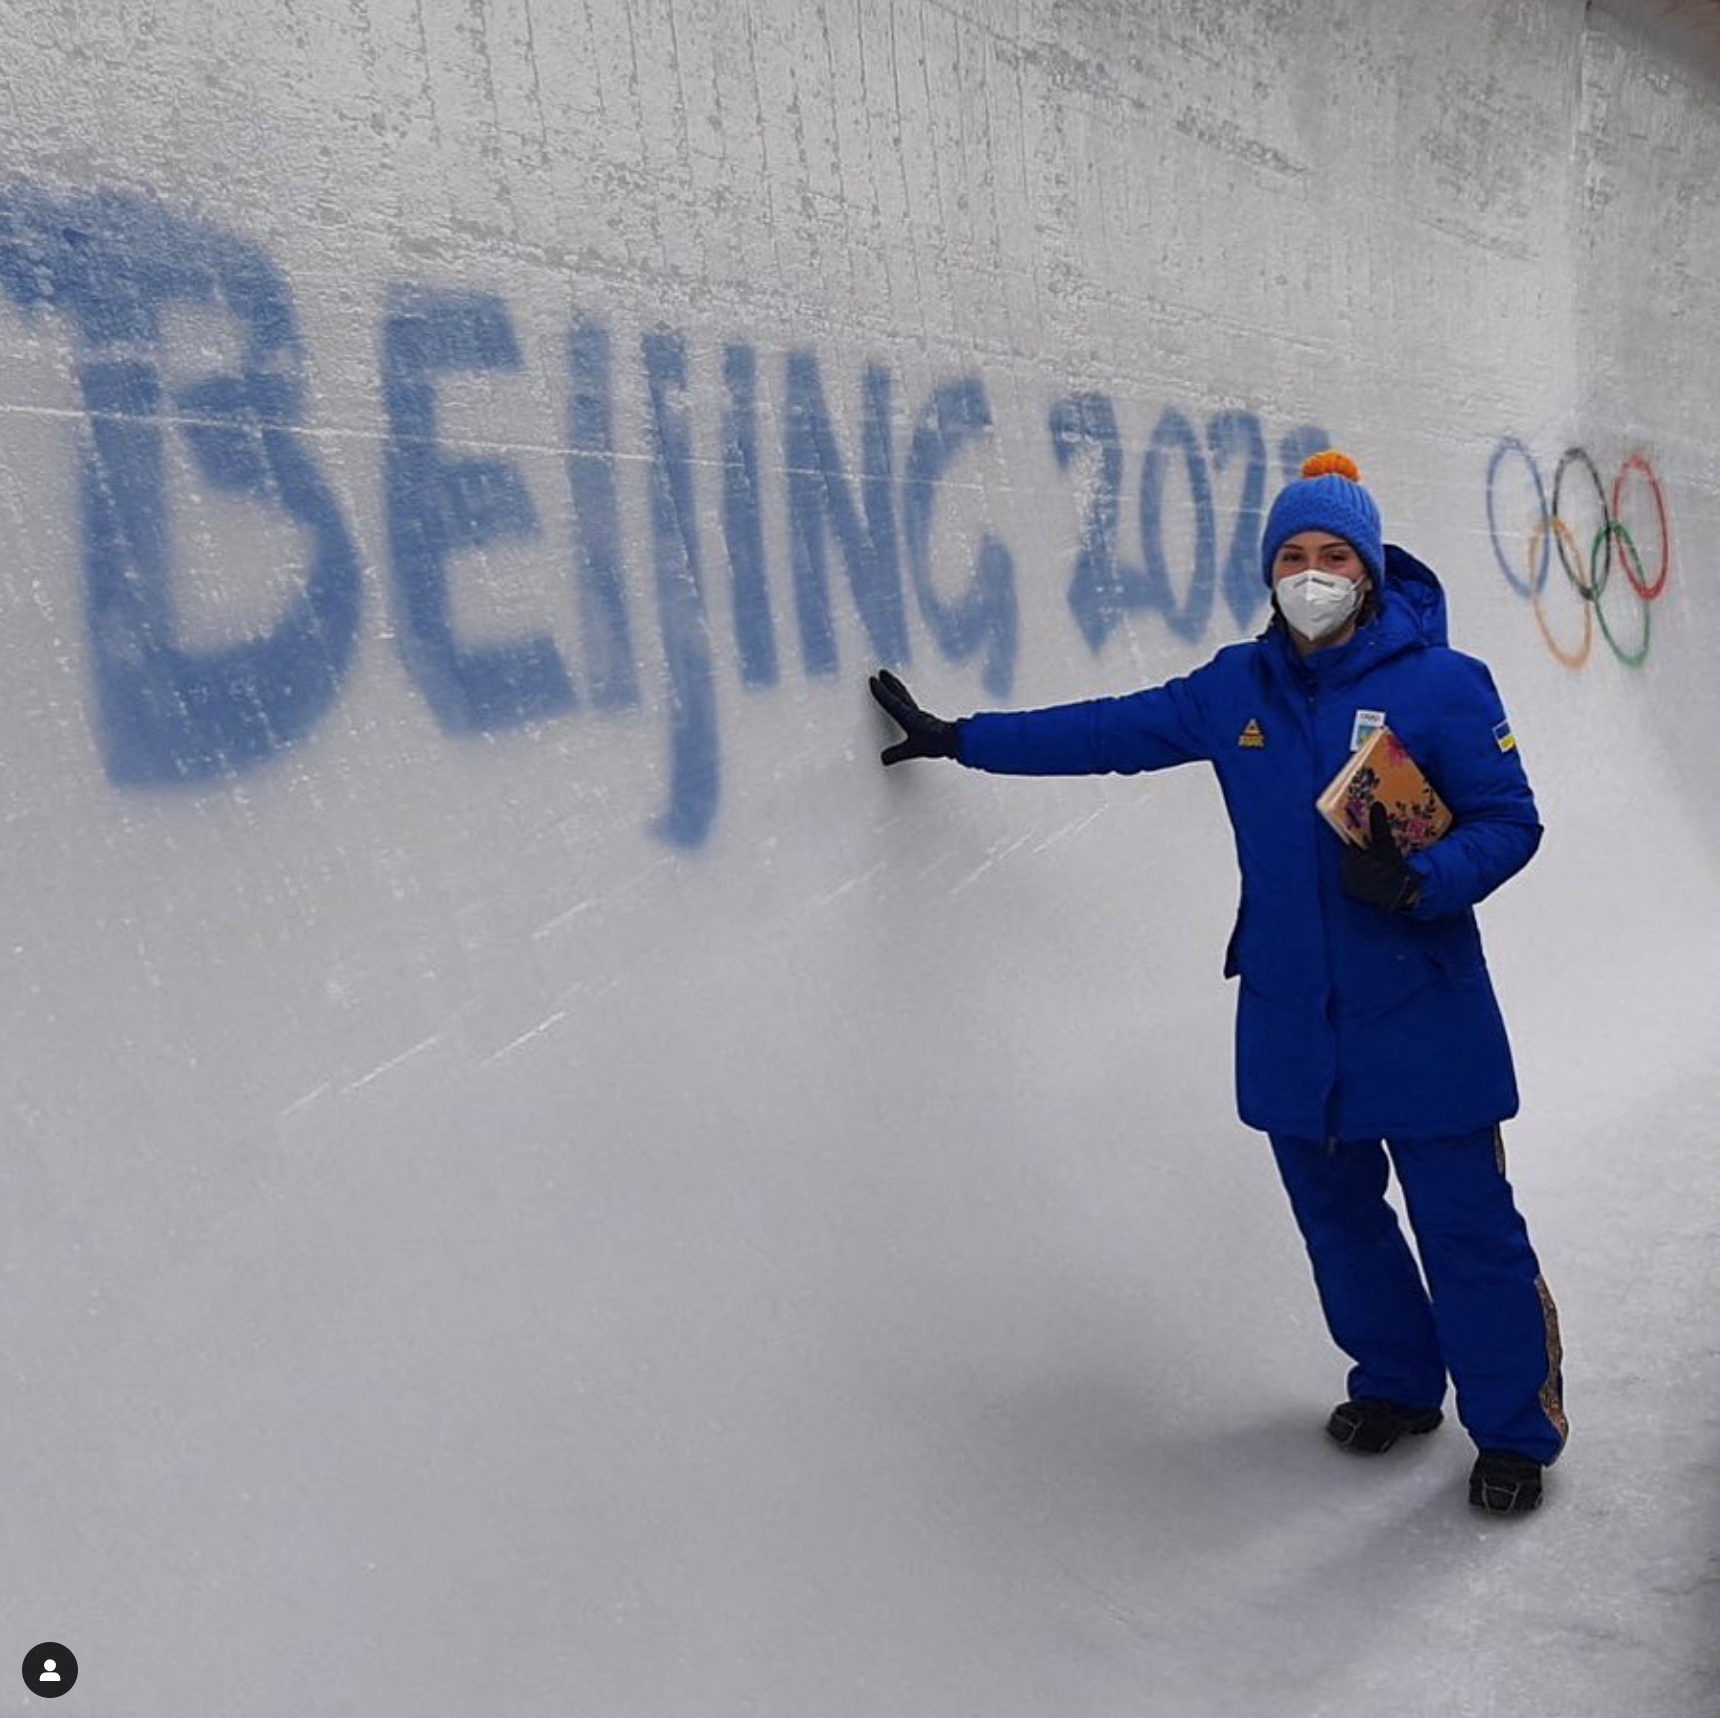 Ukrainian bobsledder, Lidiia Hunko, poses on ice next to a sign reading 